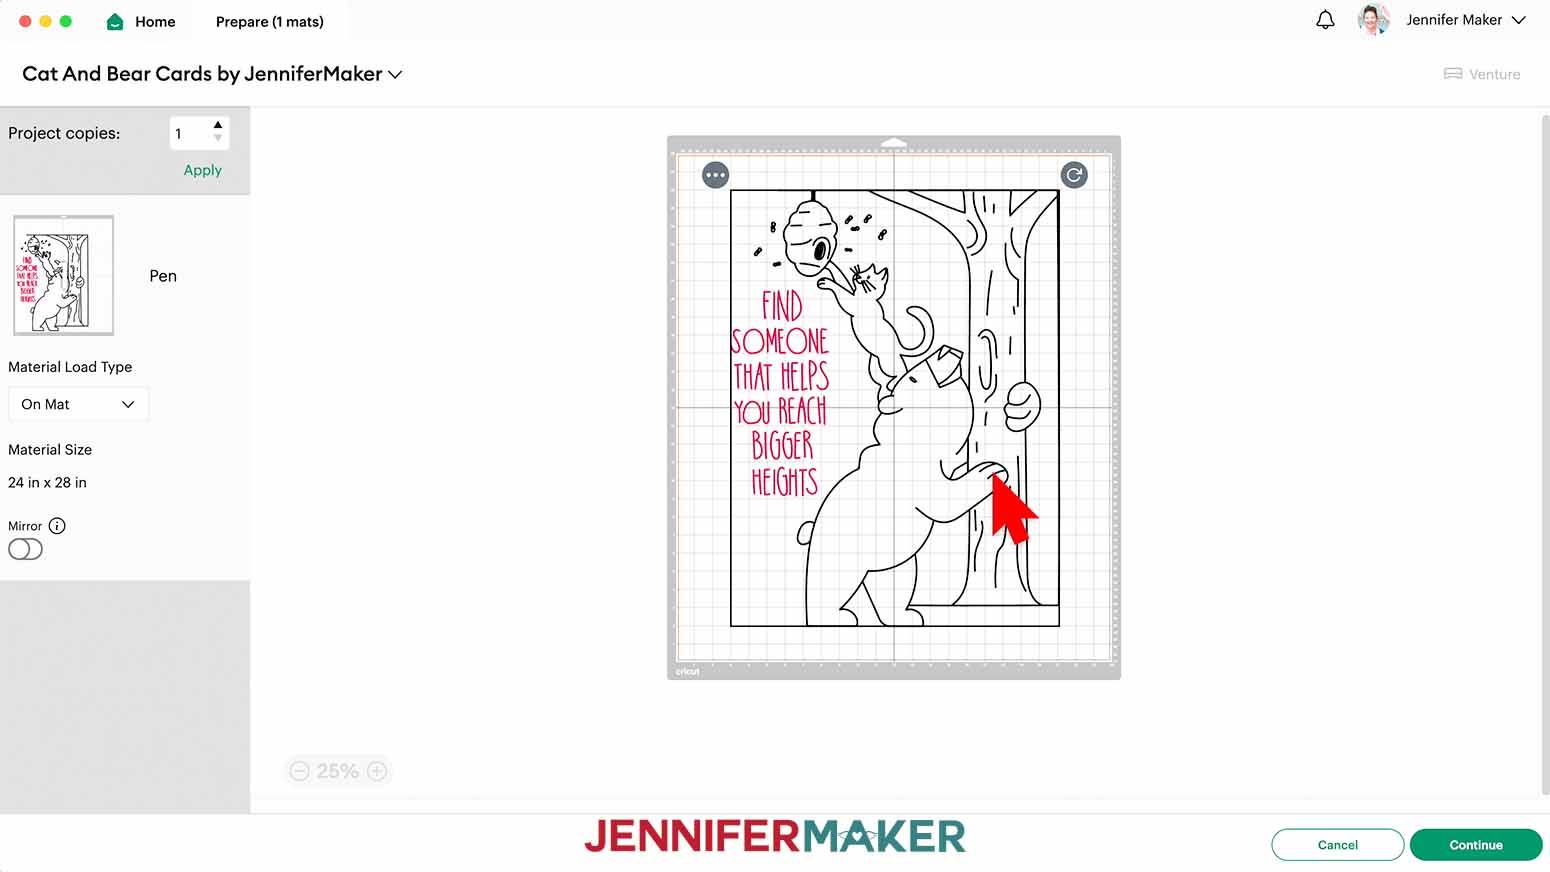 Cricut Writing and Pen Tutorial: Tips and Tricks - Jennifer Maker